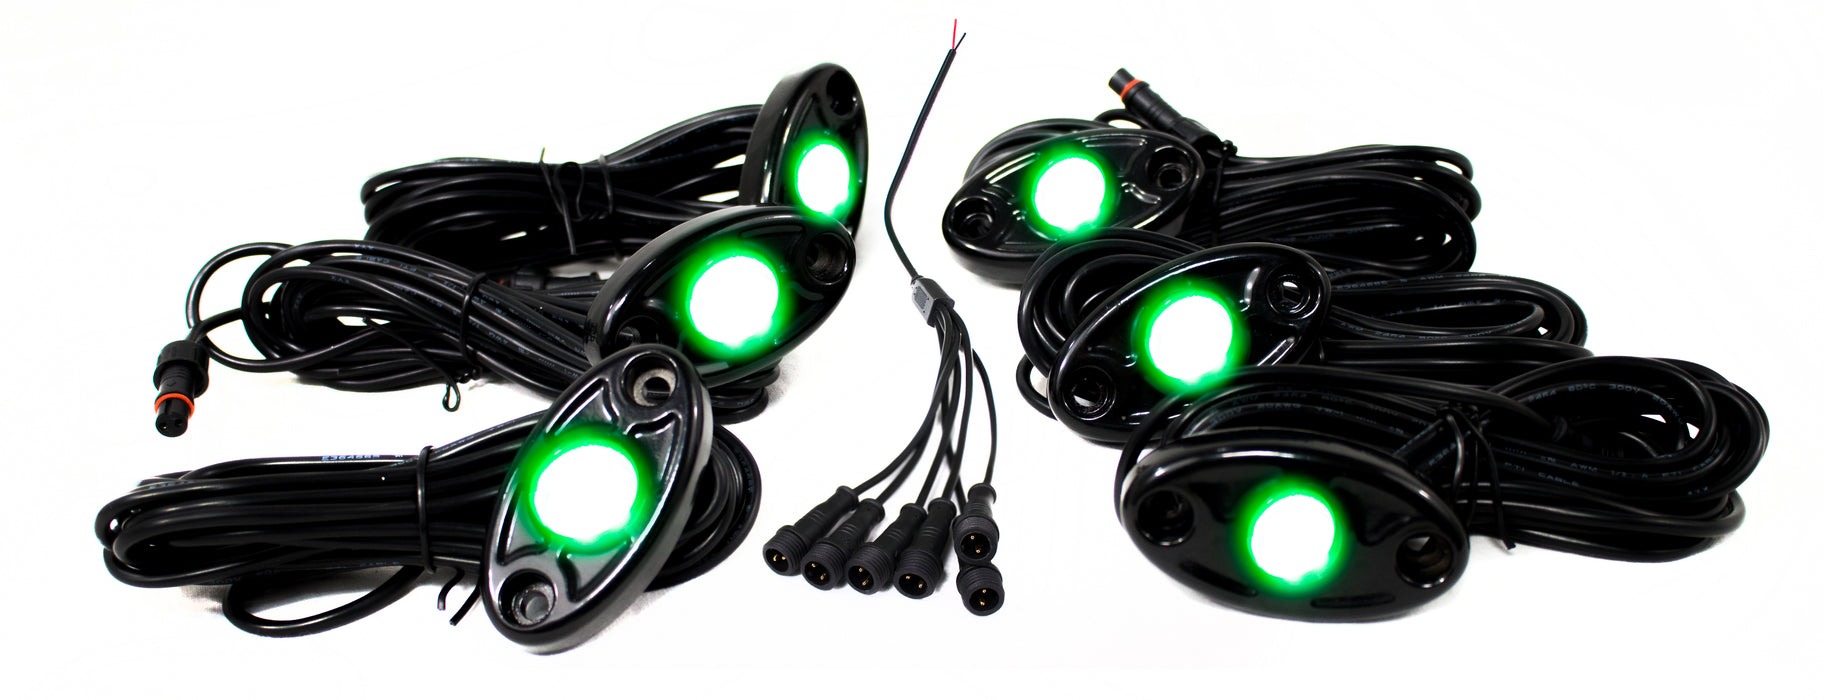 6 LED Glow Pod Kit w/ Brain Box IP68 12V w/ All Hardware (Green)